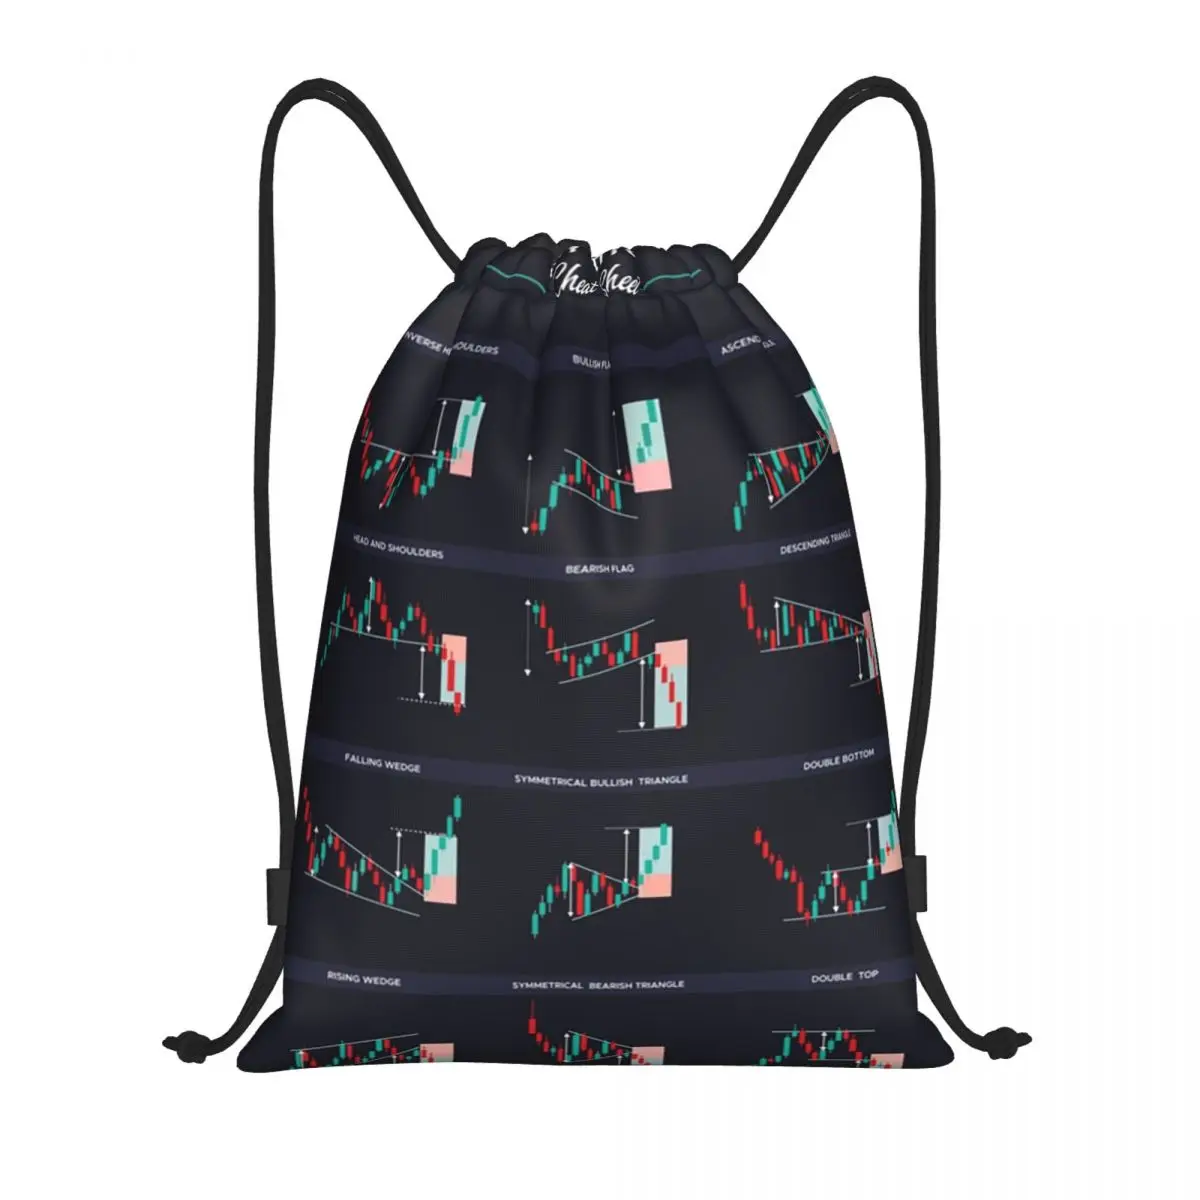 

Trading Chart Patterns Drawstring Backpack Women Men Gym Sport Sackpack Portable Stock Trading Forex Shopping Bag Sack